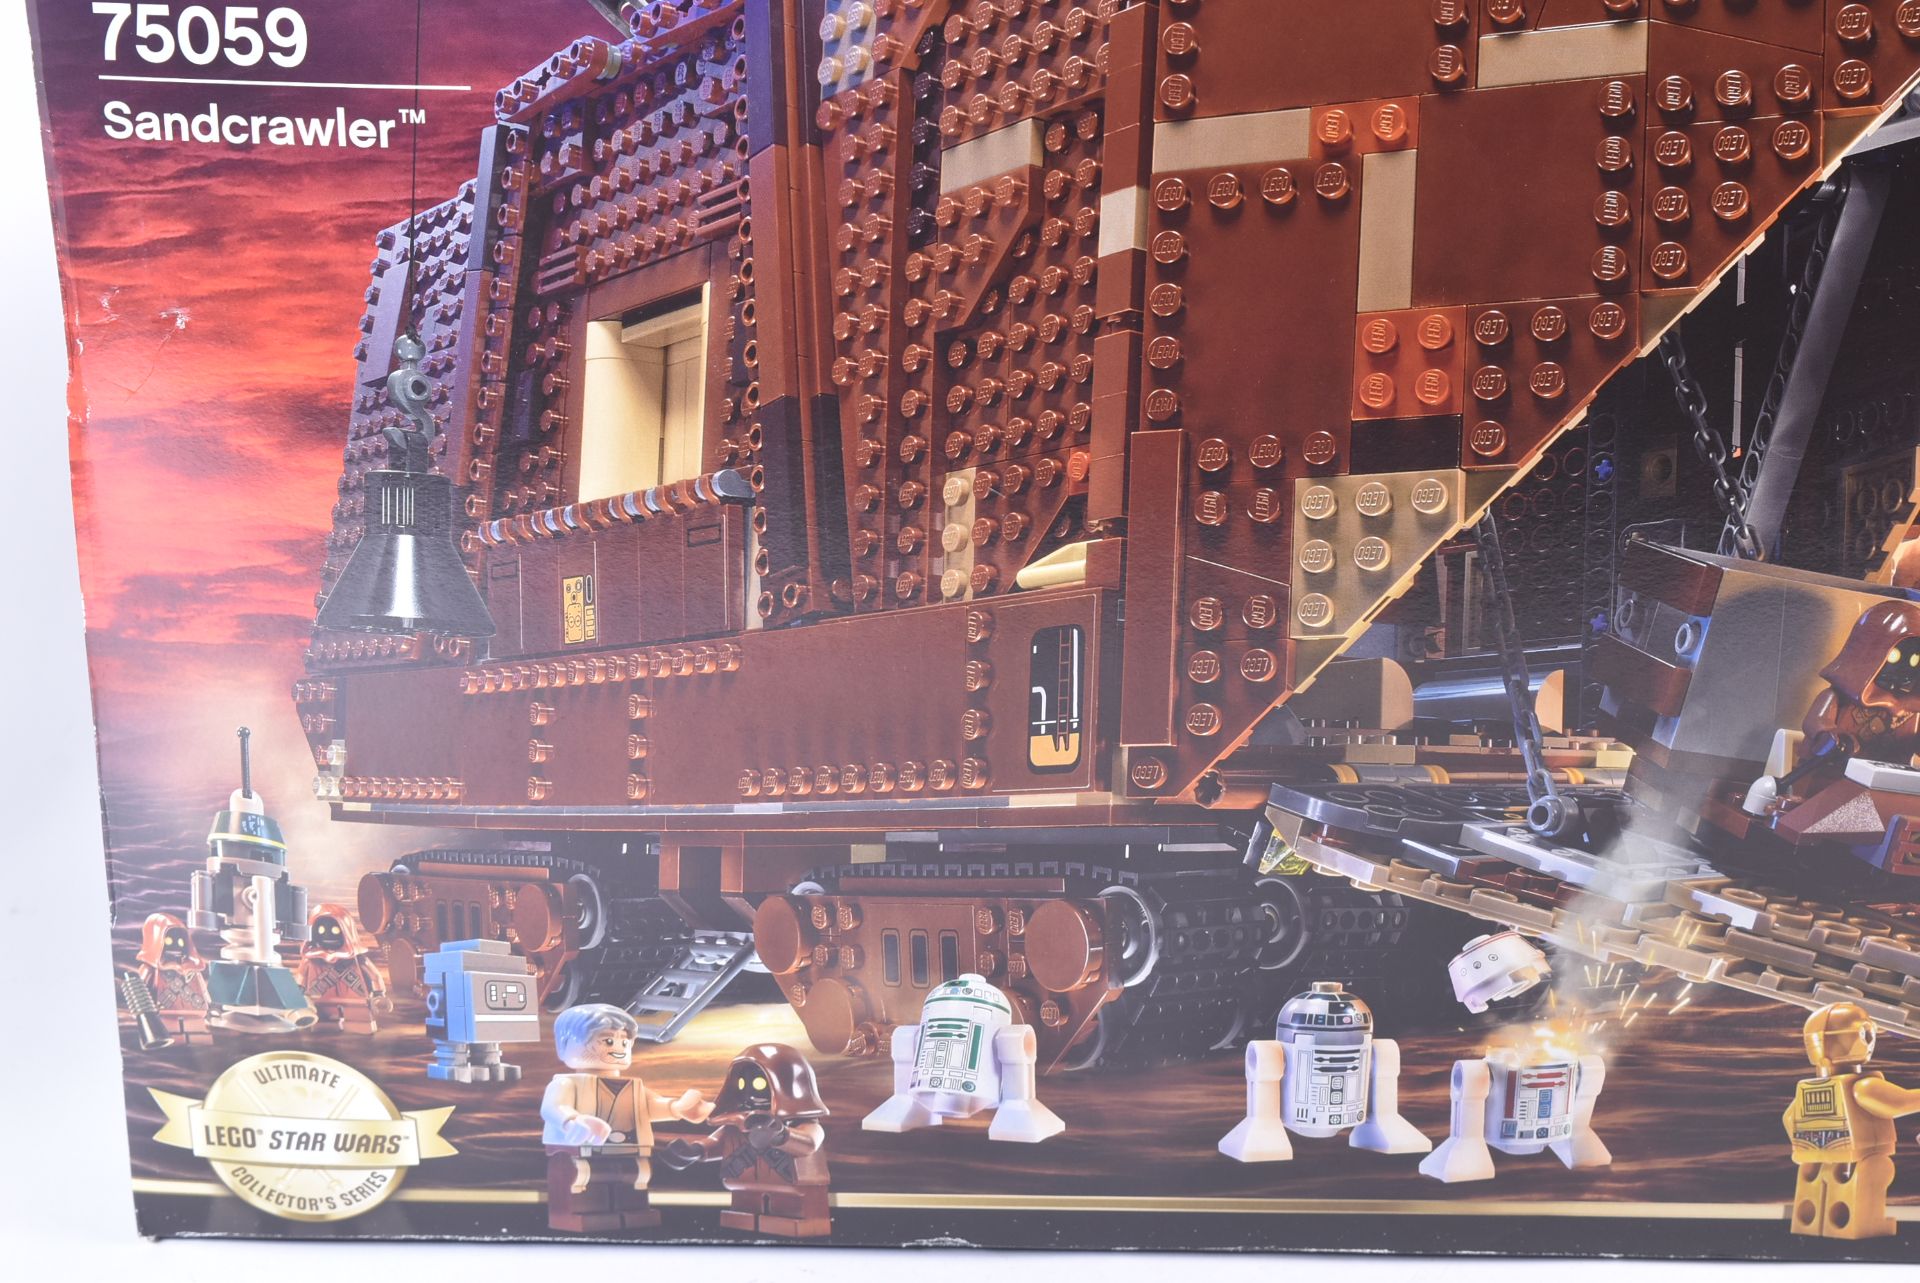 LEGO SET - STAR WARS - 75059 - SANDCRAWLER - ULTIMATE COLLECTORS EDITION - Image 3 of 5